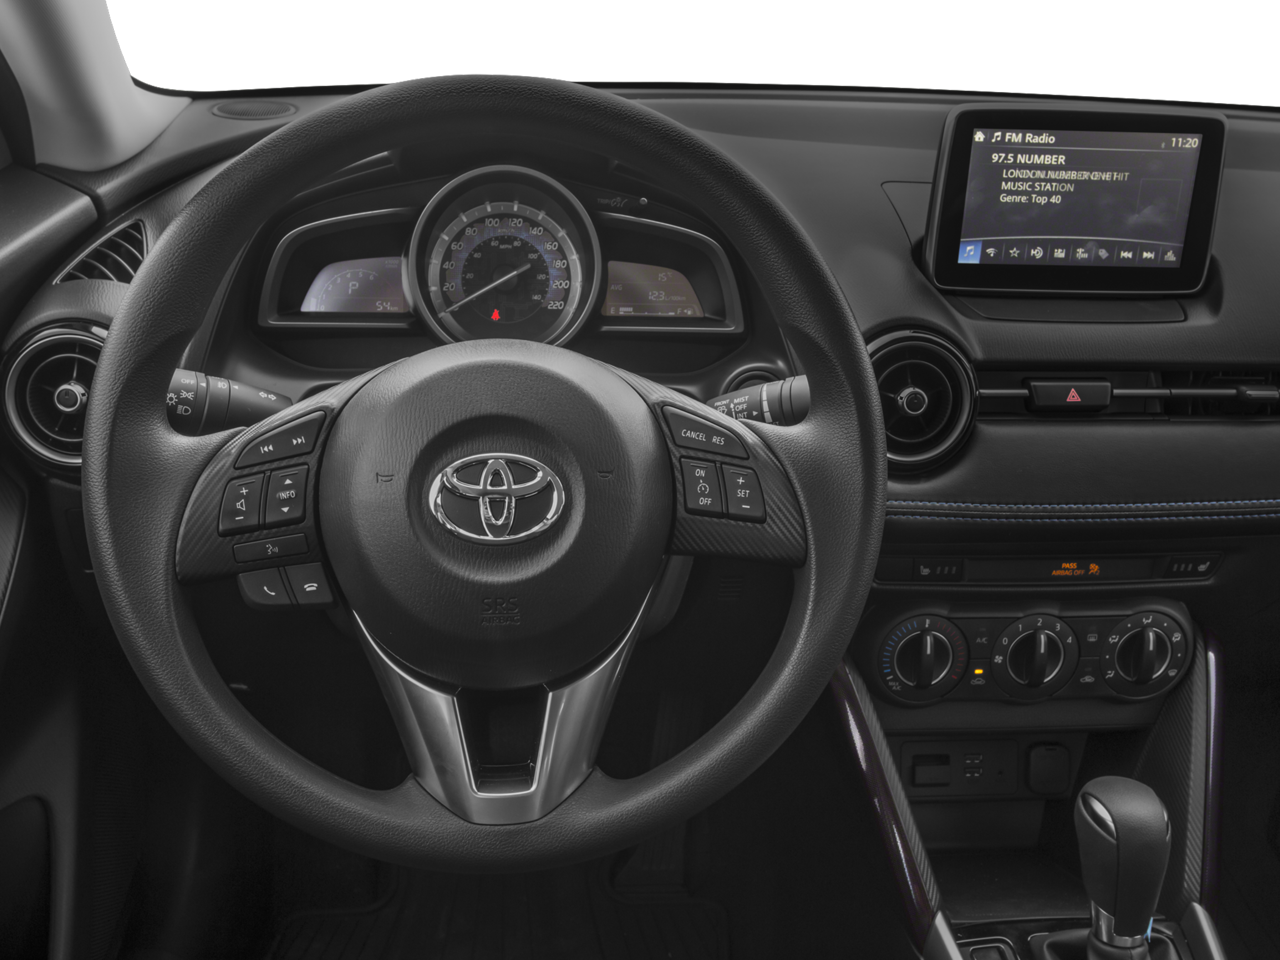 2017 Toyota Yaris iA Base 4DRS- AUTOMATIC